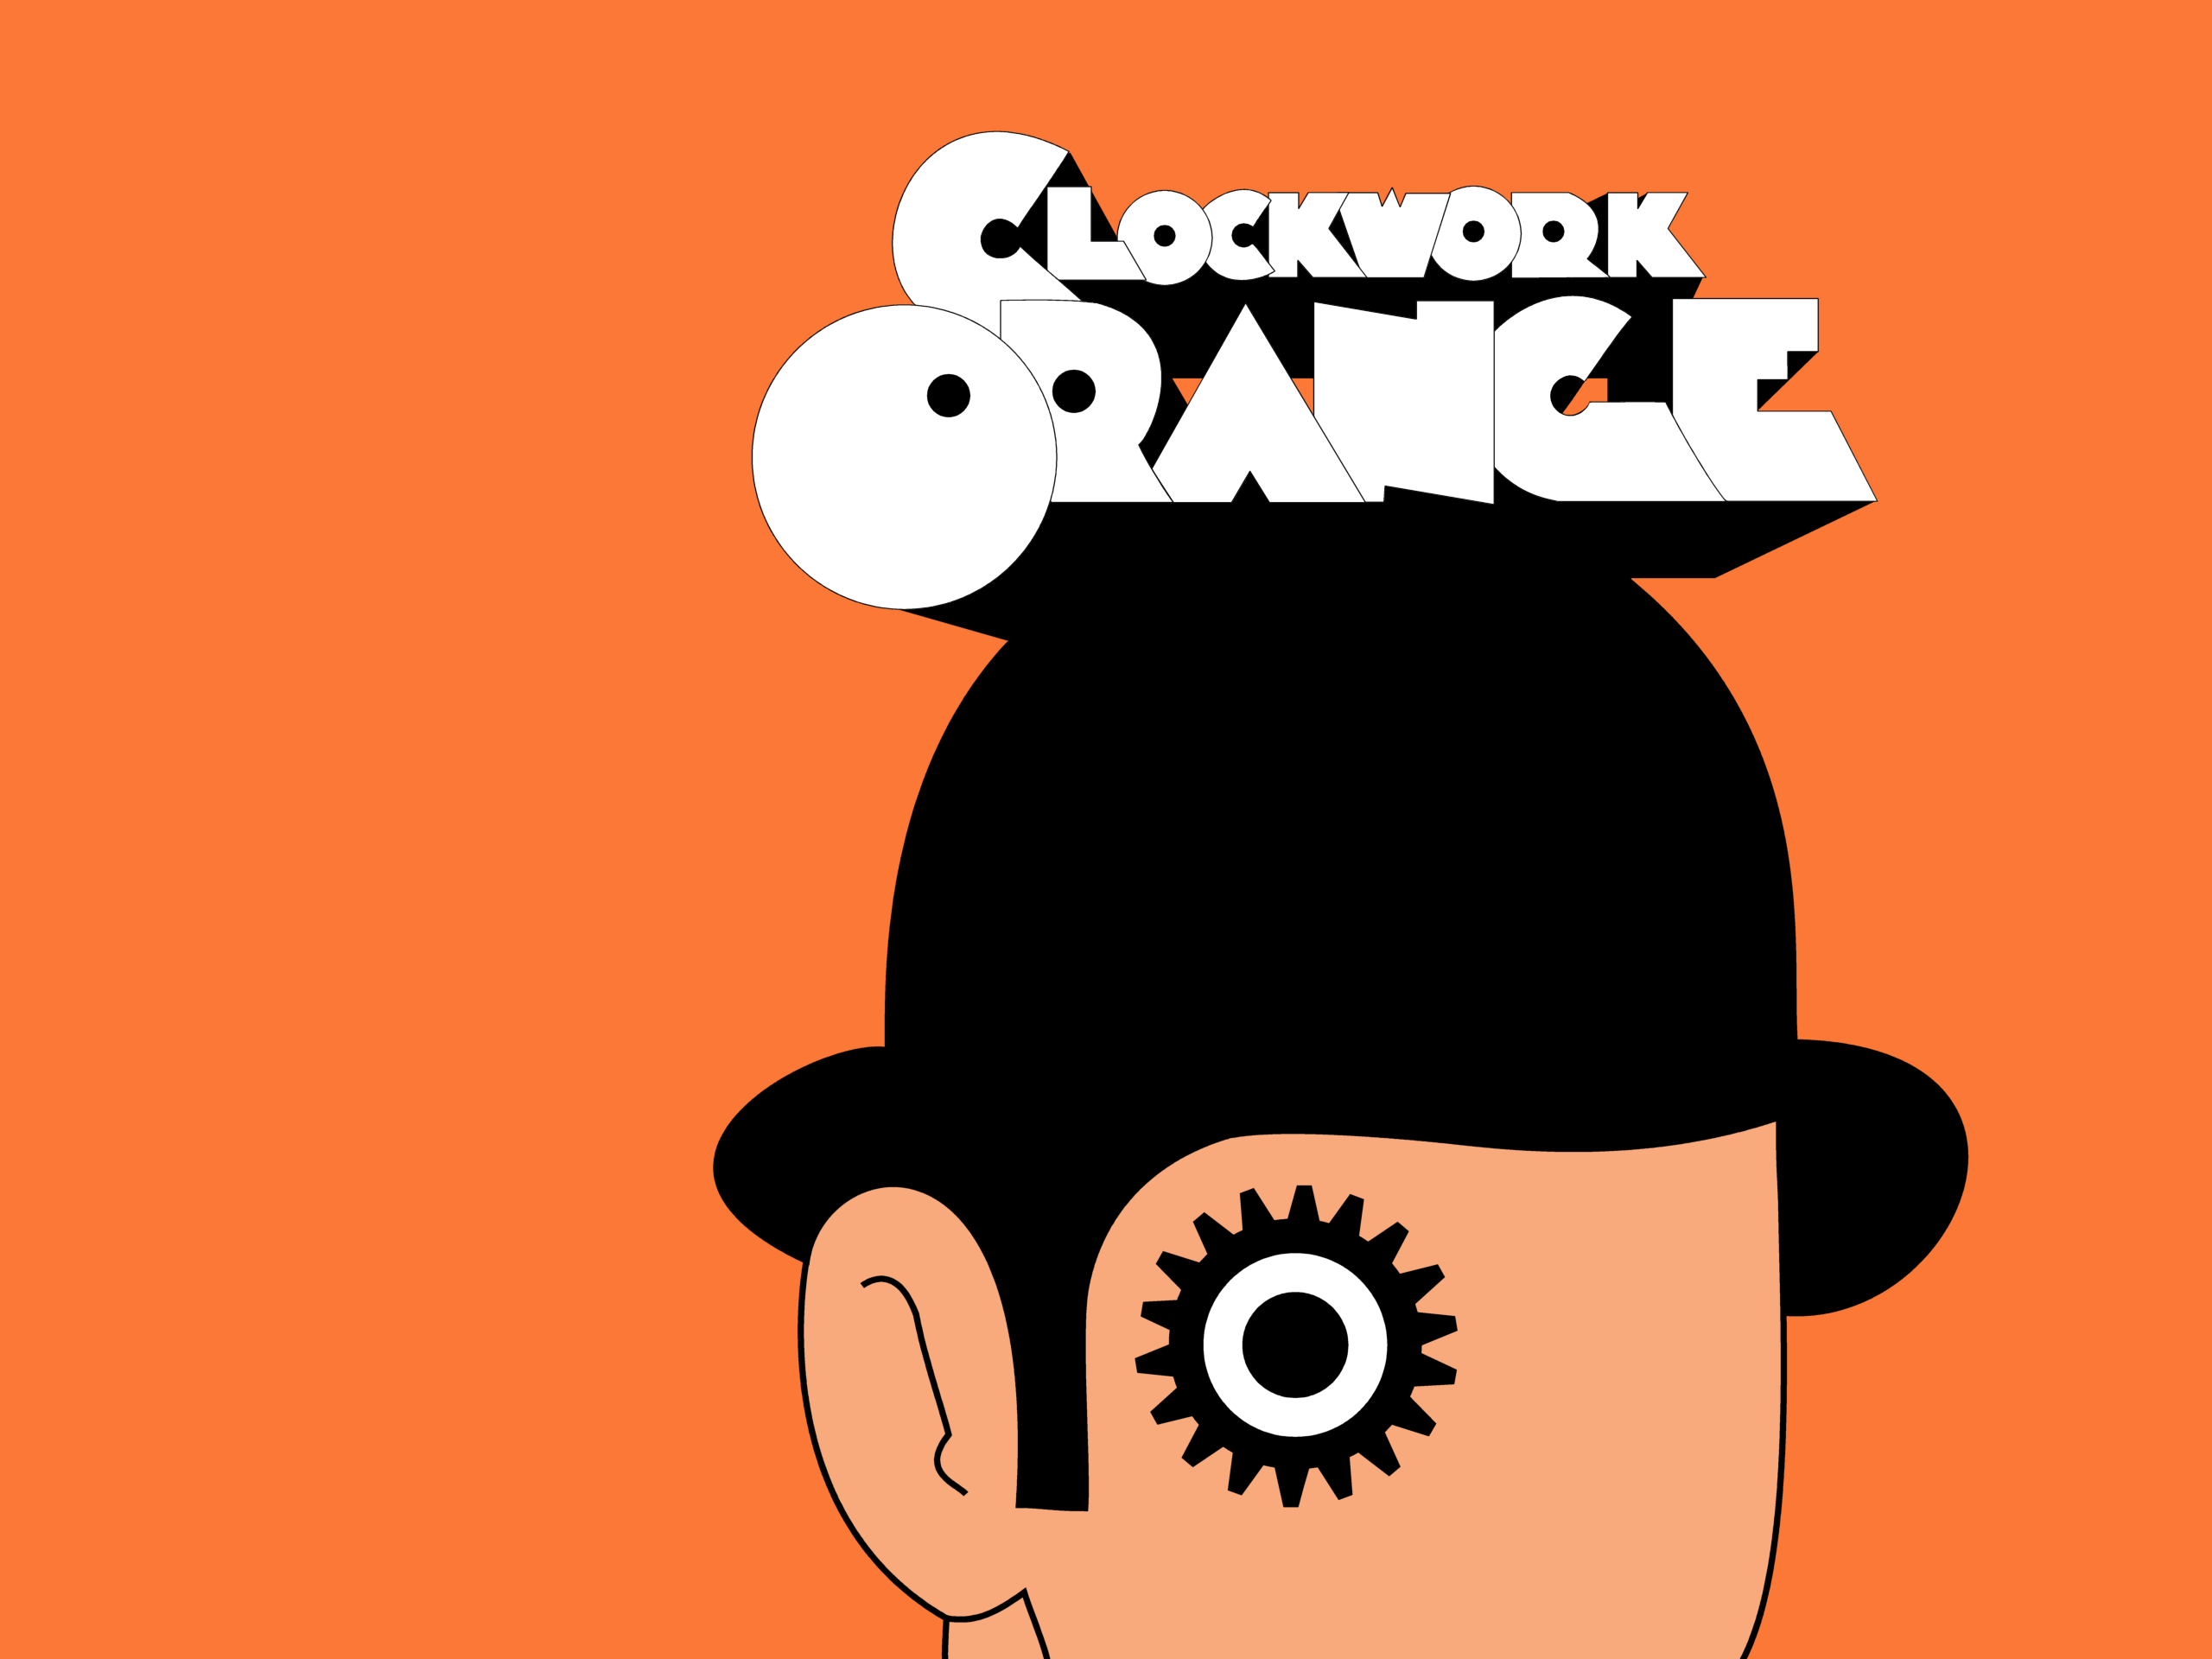 A Clockwork Orange 1962